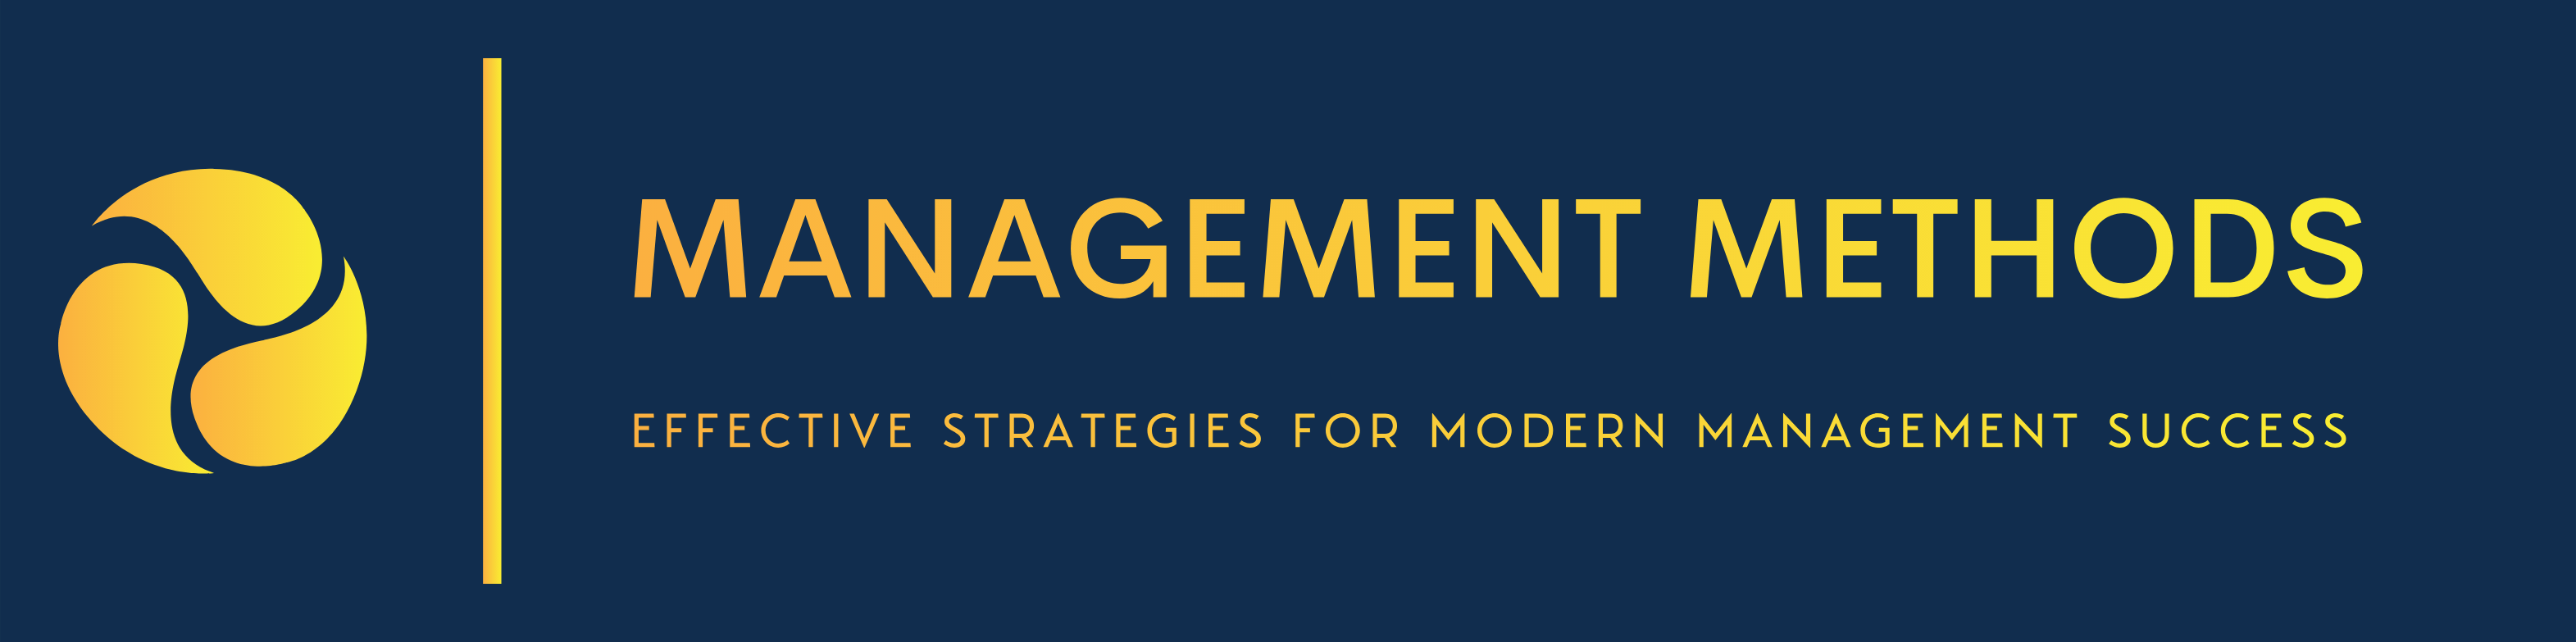 Management Methods - Effective strategies for modern management success